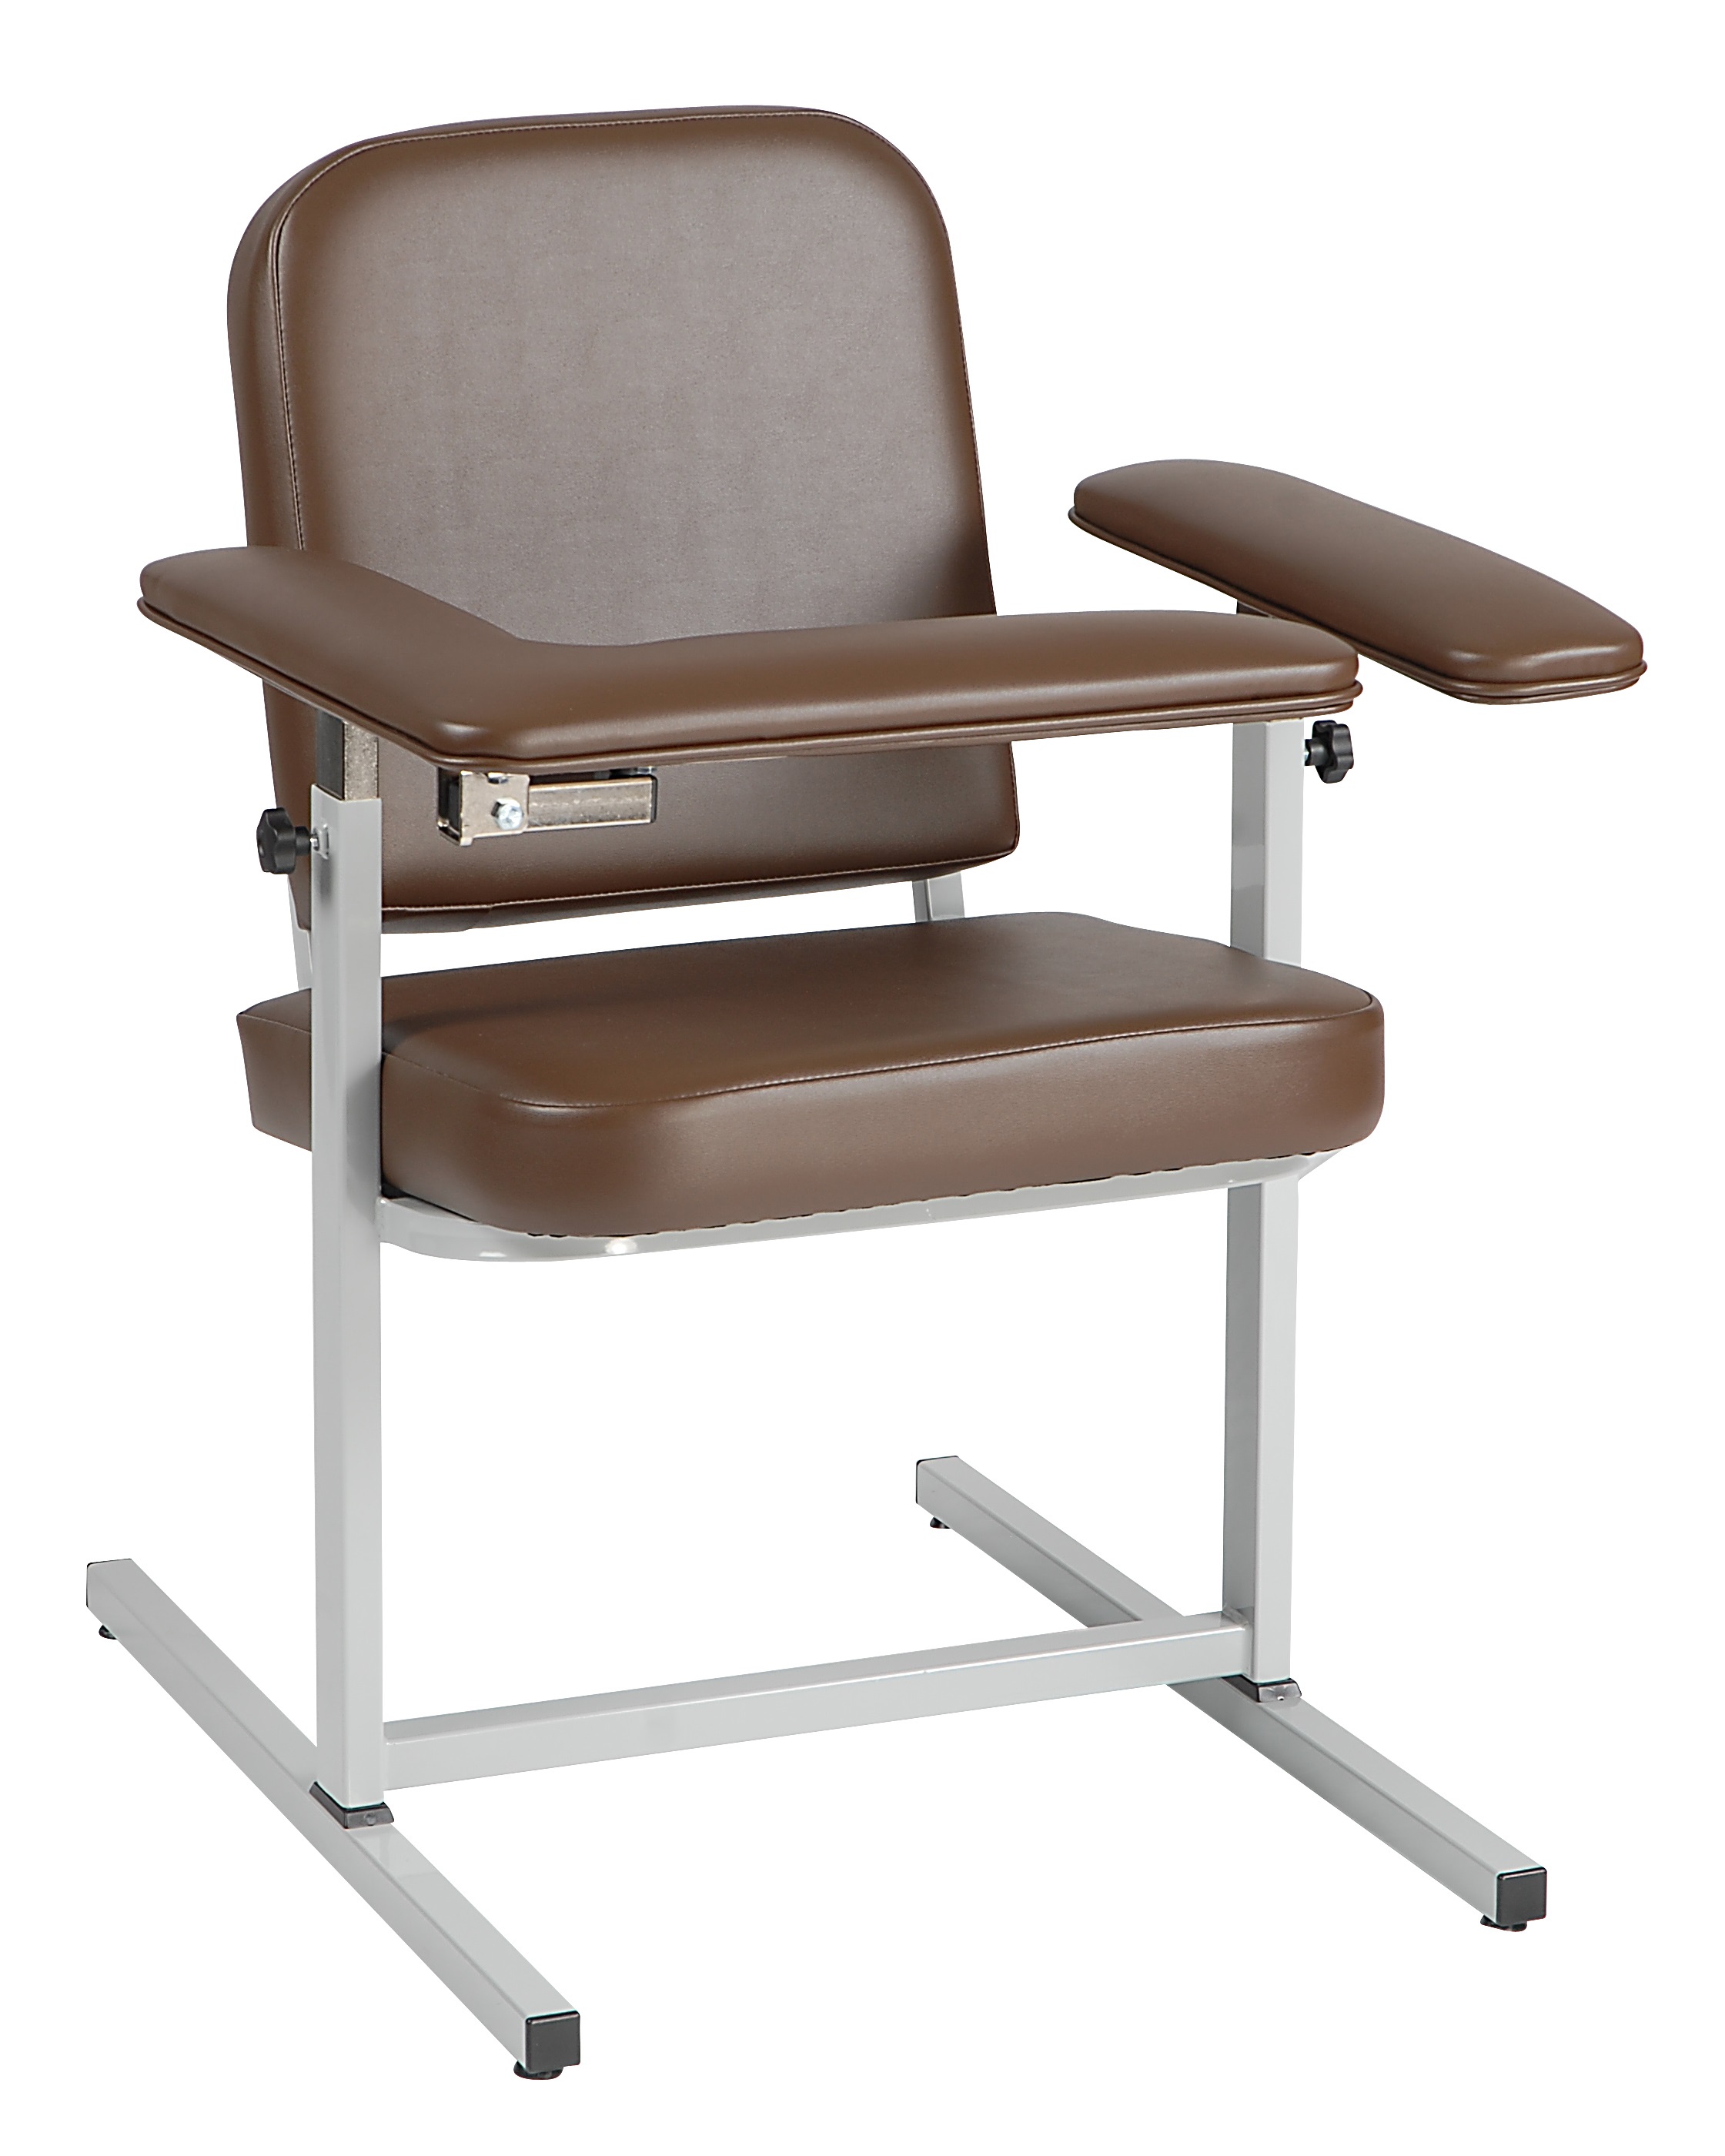 Narrow Standard Height Blood Draw Chair 